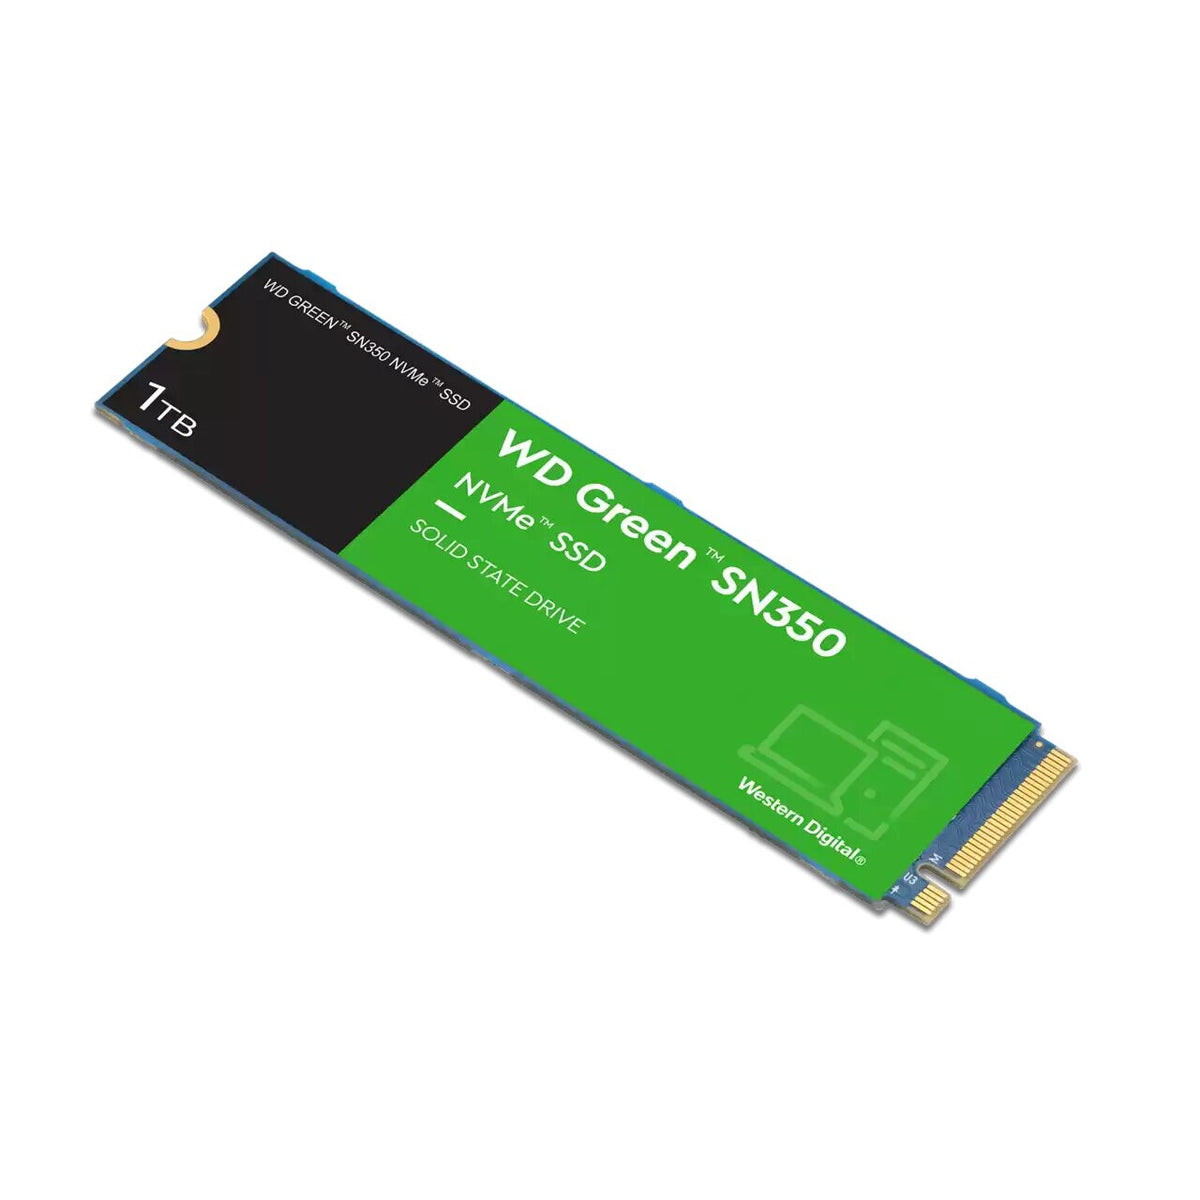 Western Digital WD Green - PCI Express QLC NVMe M.2 SDD - 1 TB